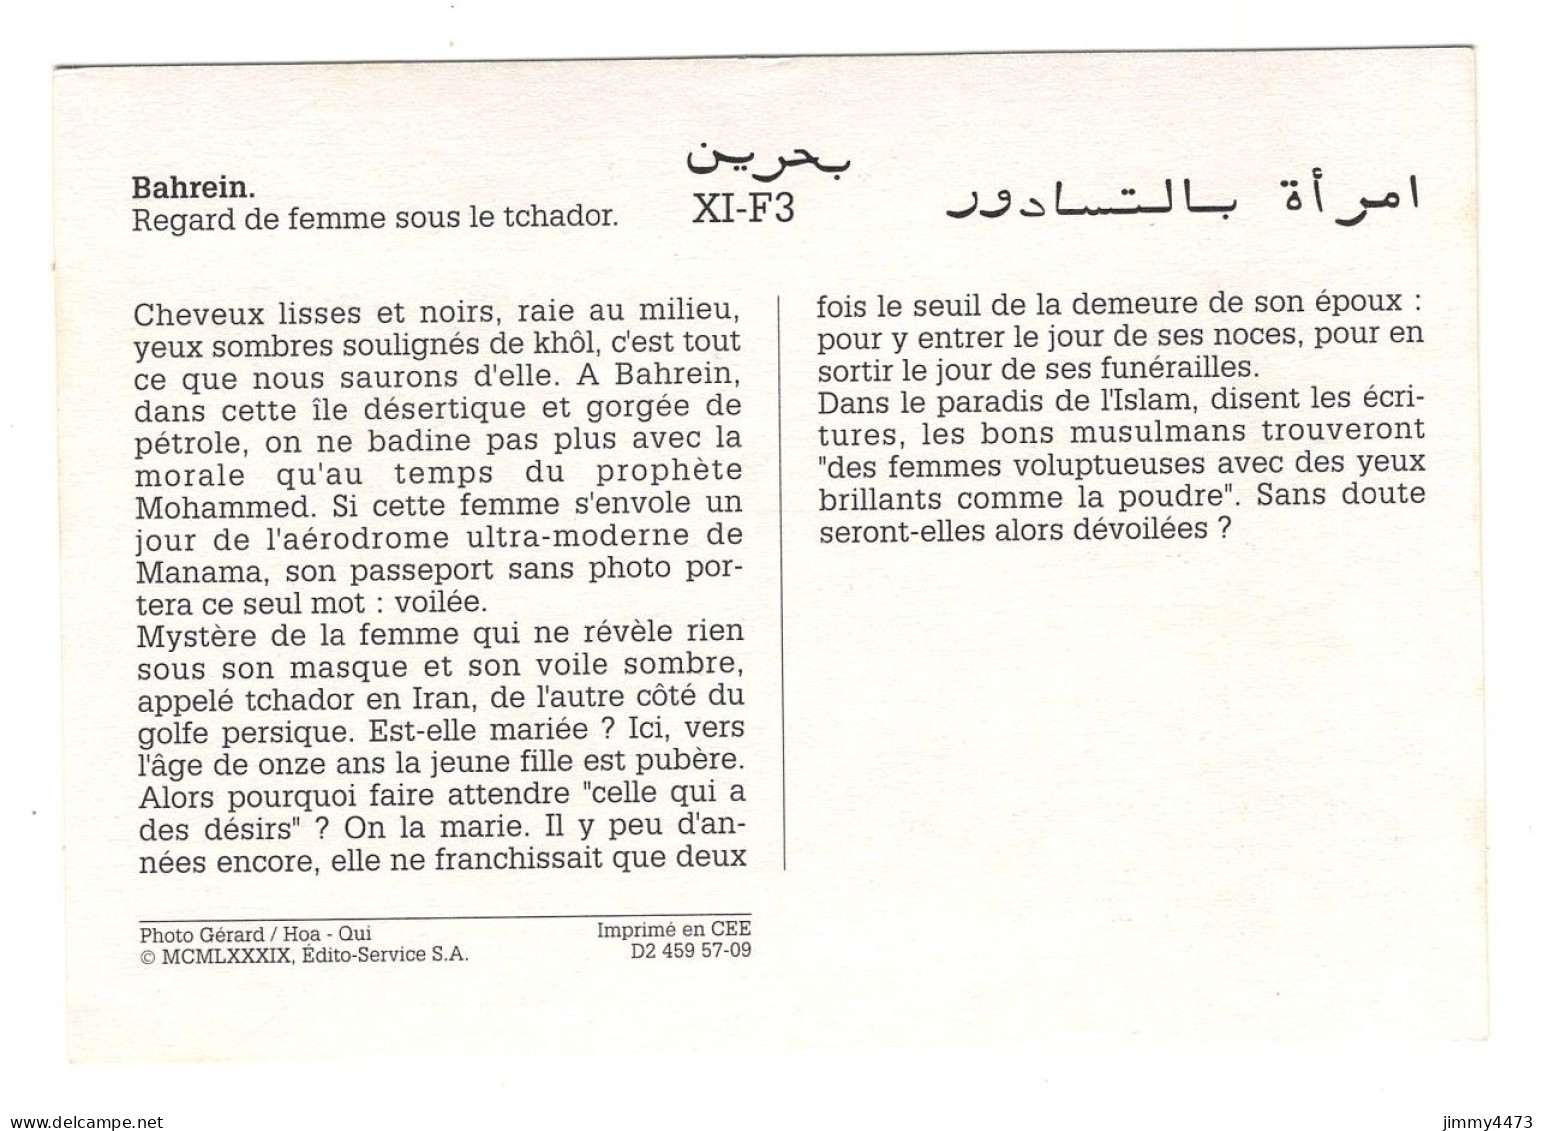 BAHREIN - Regard De Femme Sous Le Tchador ( Texte Au Dos ) XI-F3 - Photo Gérard / Hoa - Qui - Bahrein